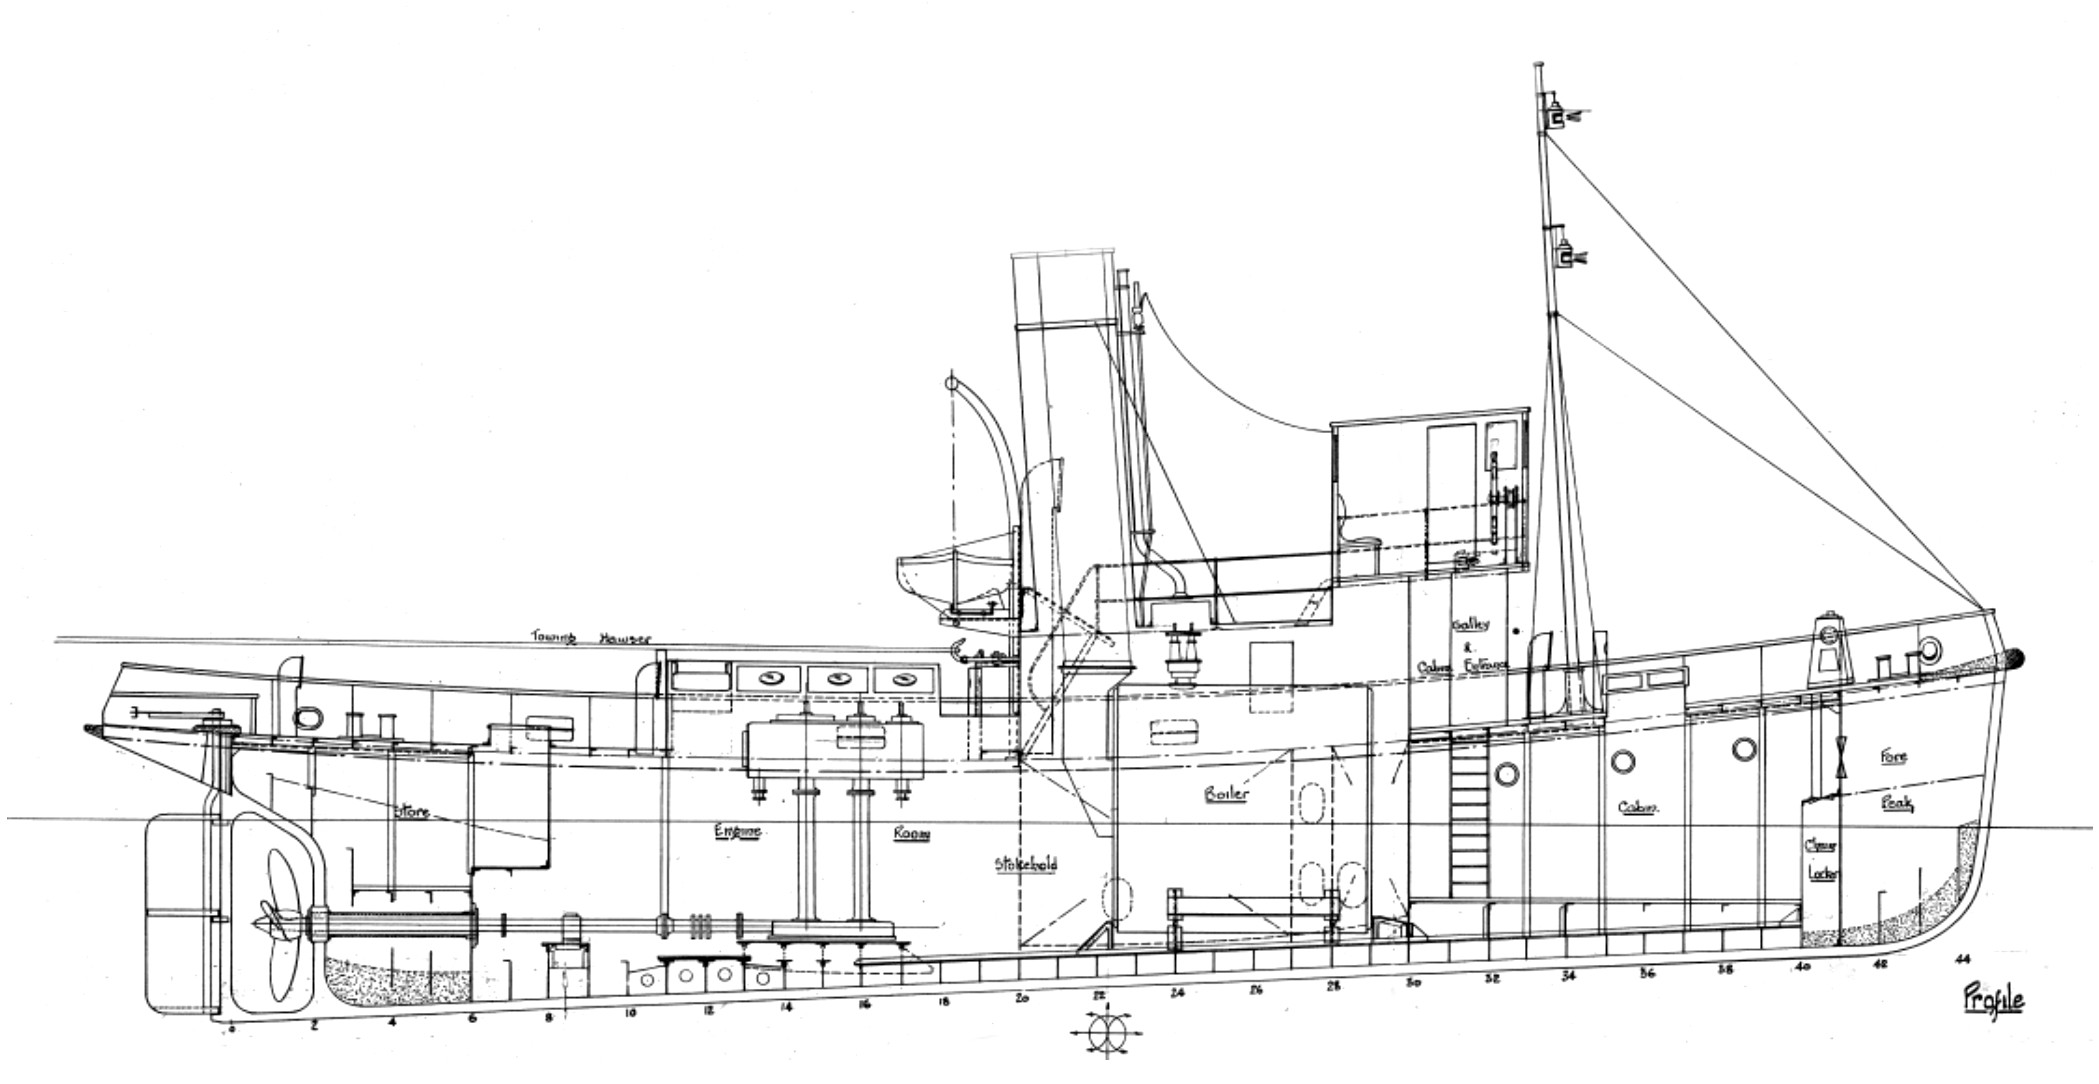 General Arrangement profile of ship No. 111 (Codeco/Wattle)